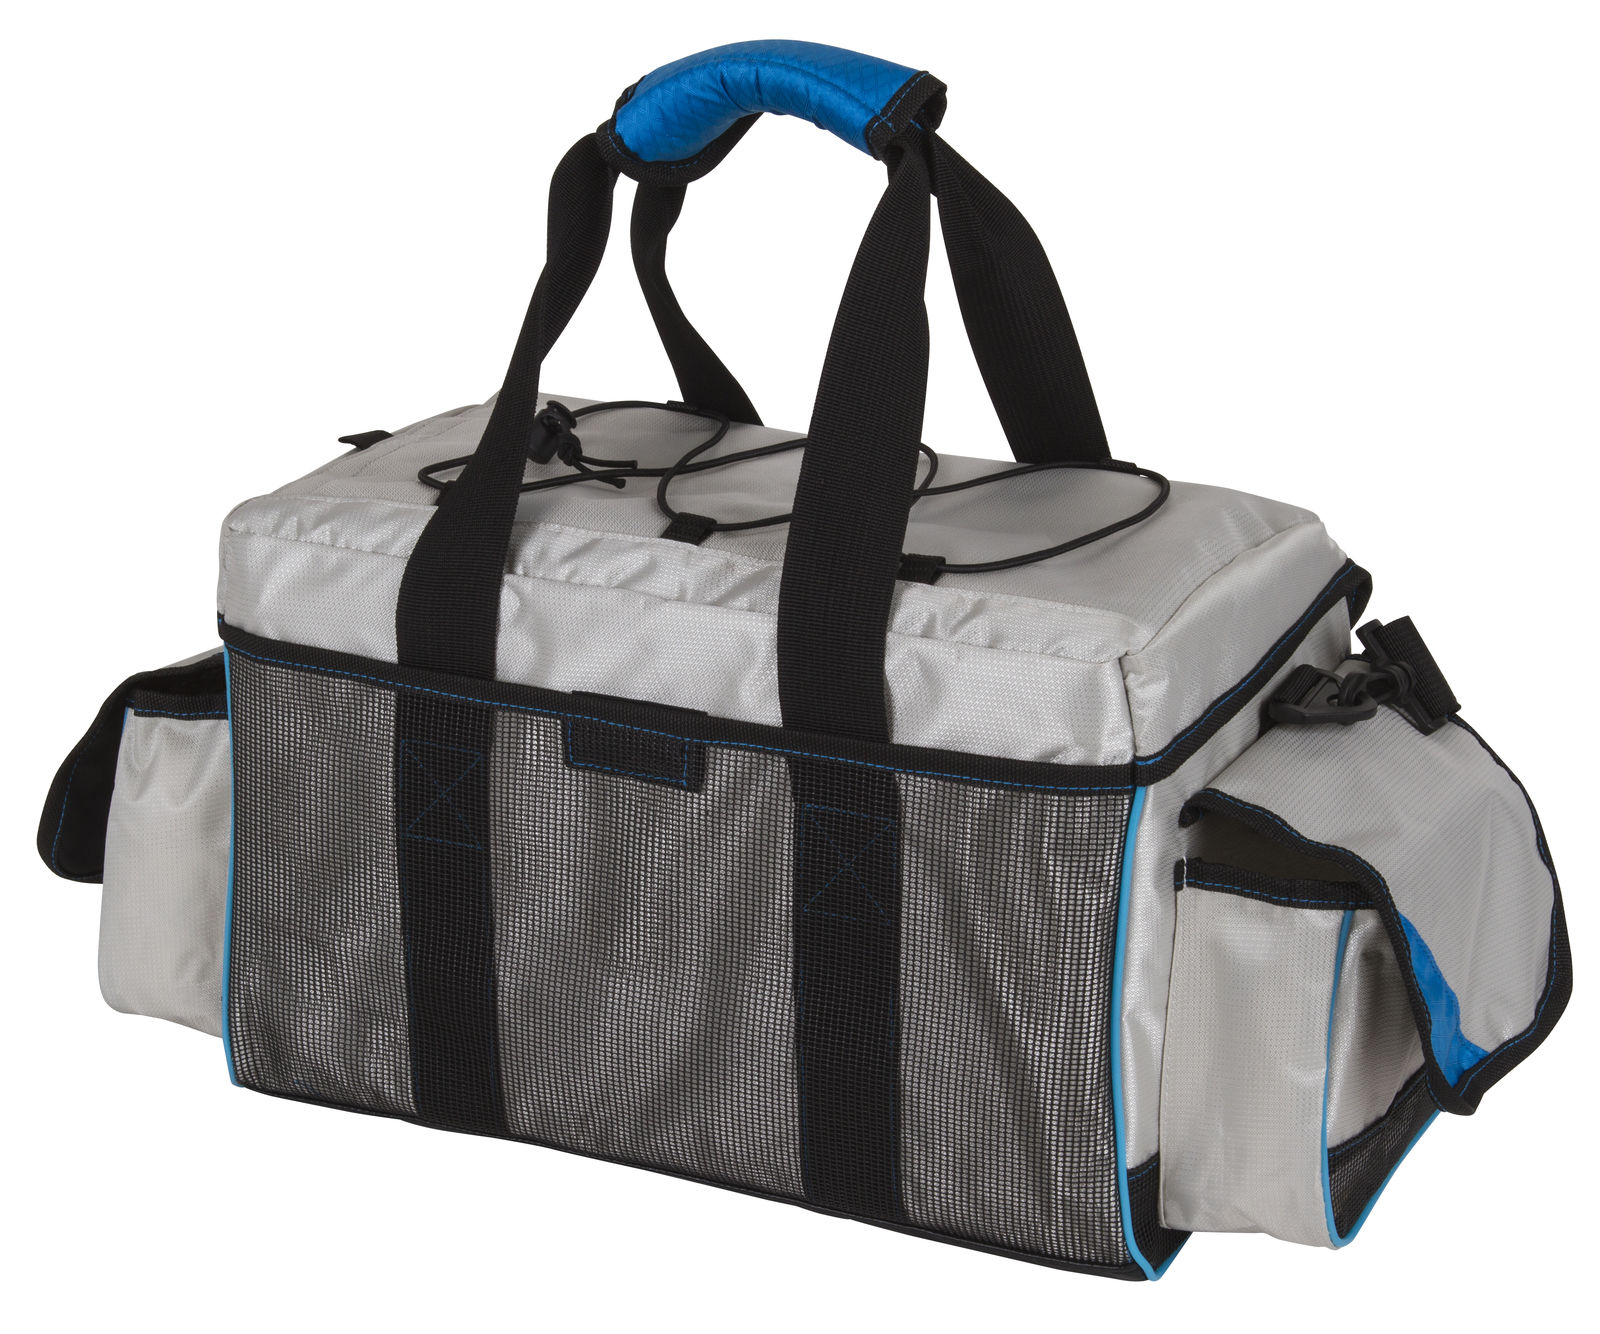 Coastal Series 5000 Tackle Bag - Large